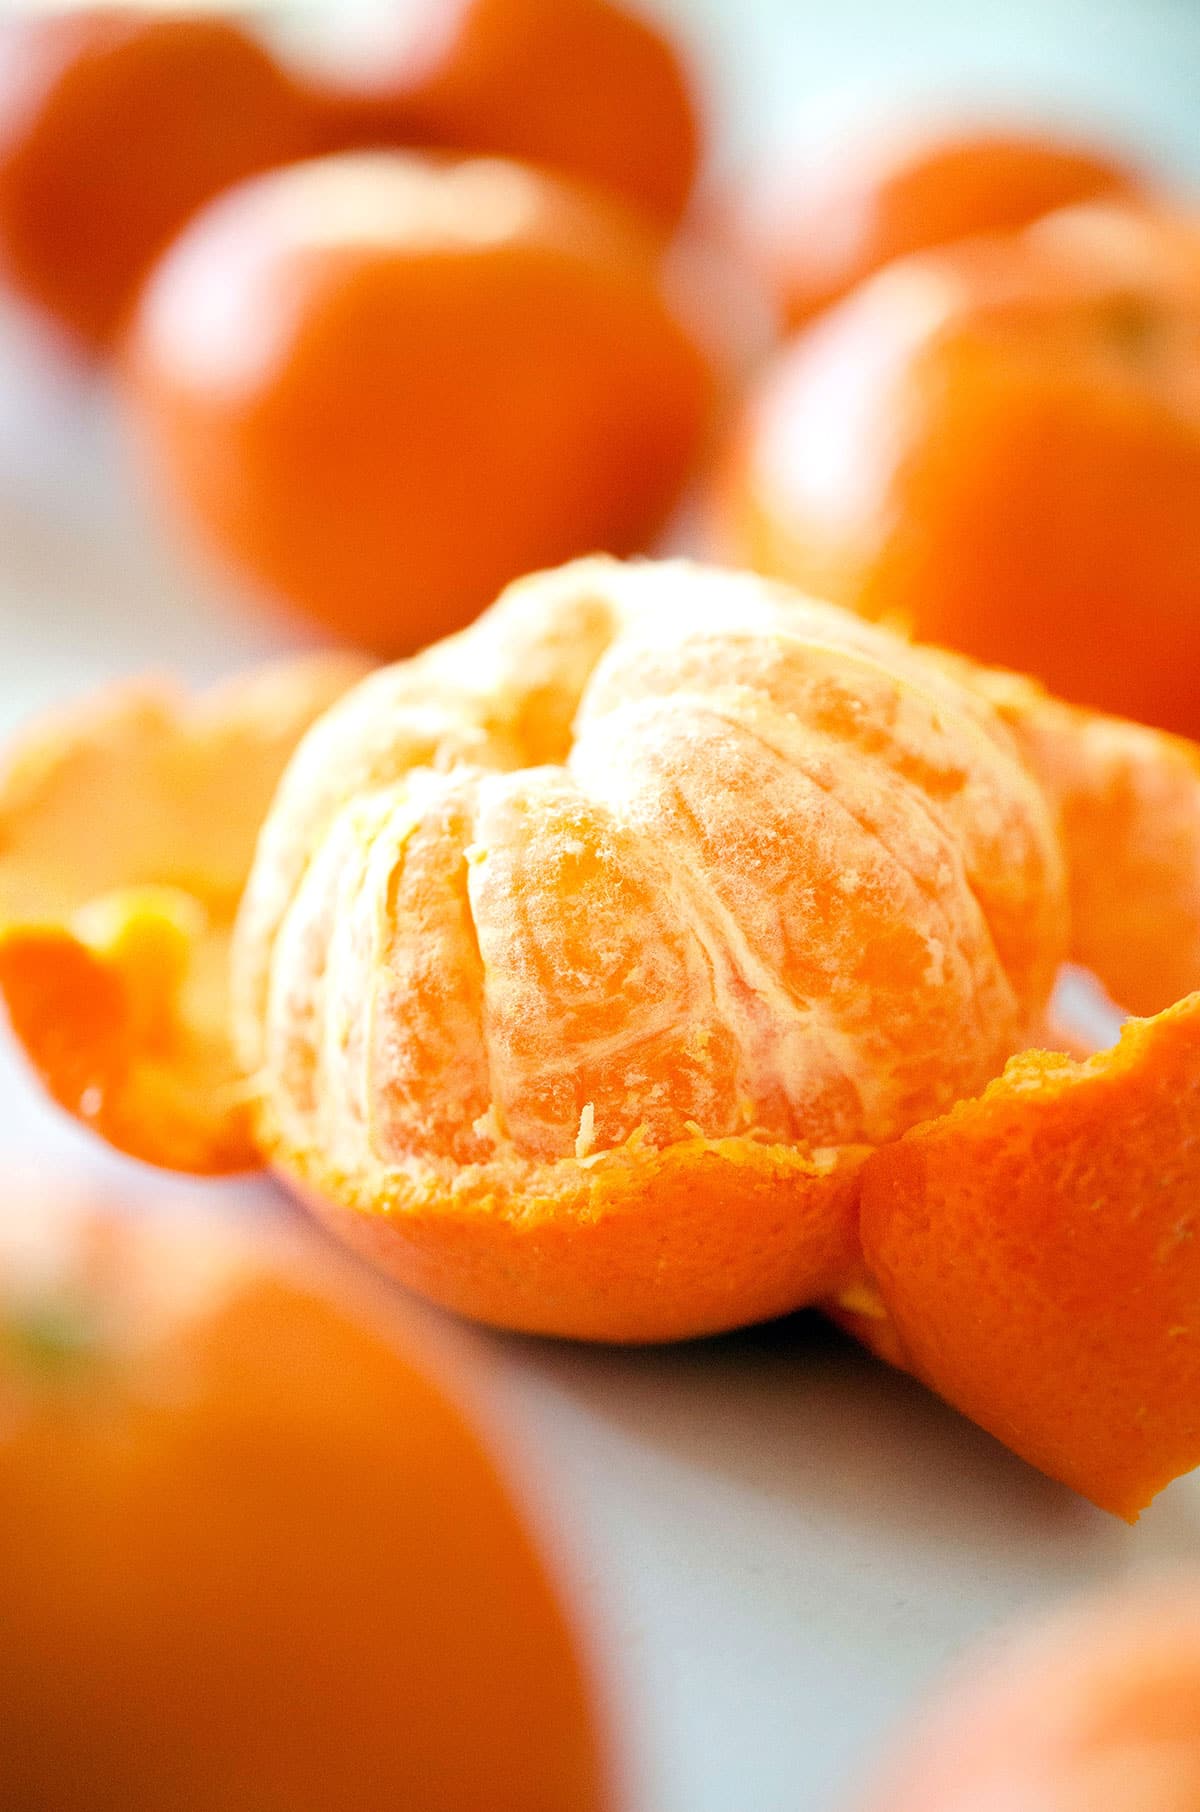 Close-up photo of a mandarin orange peeled.